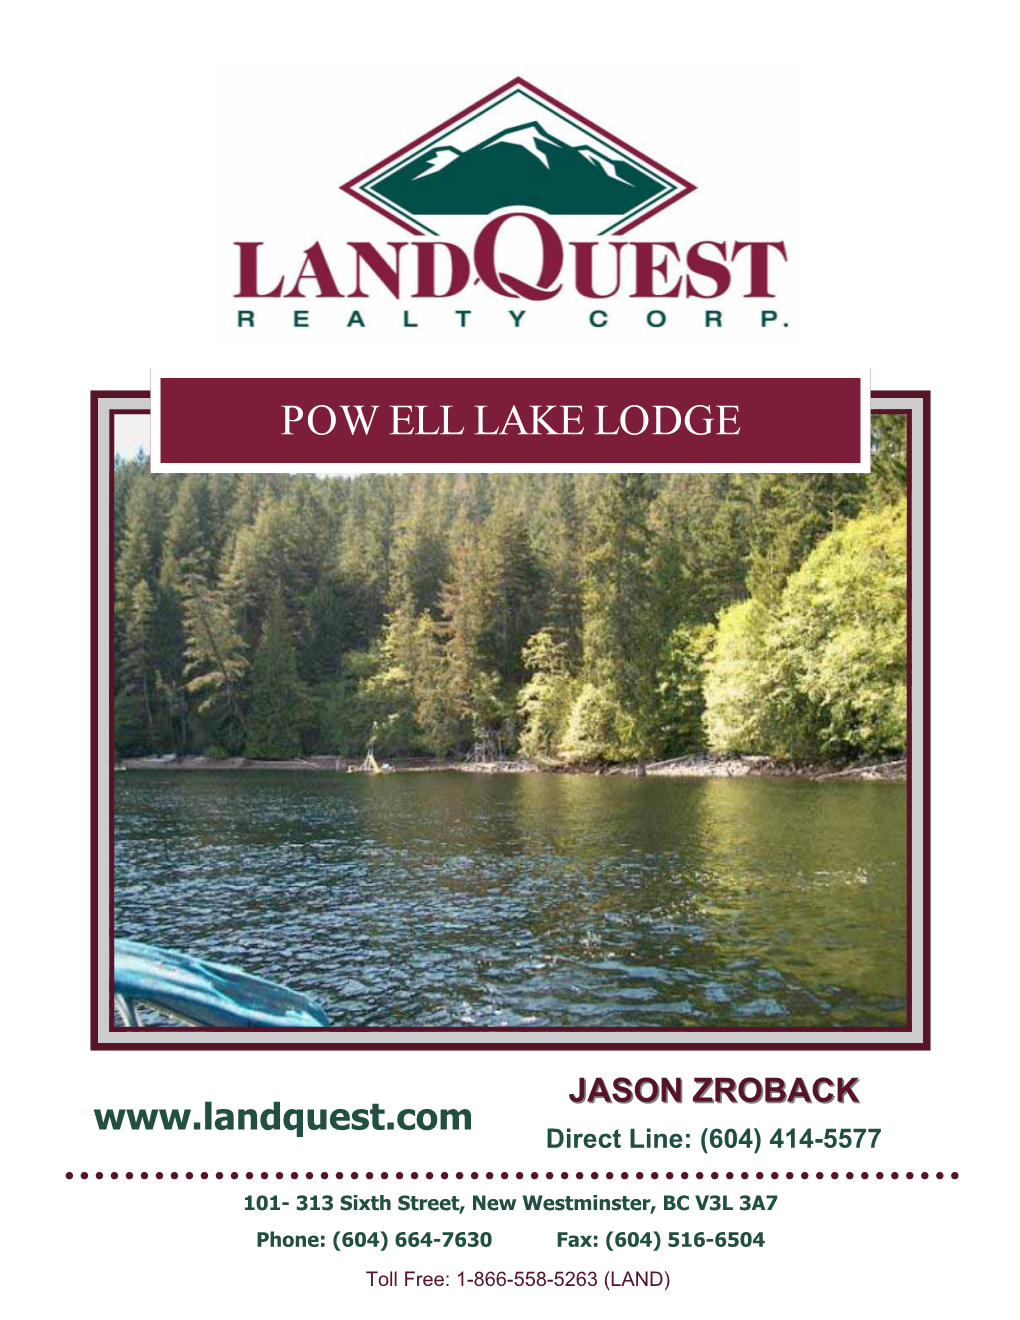 Powell Lake Lodge